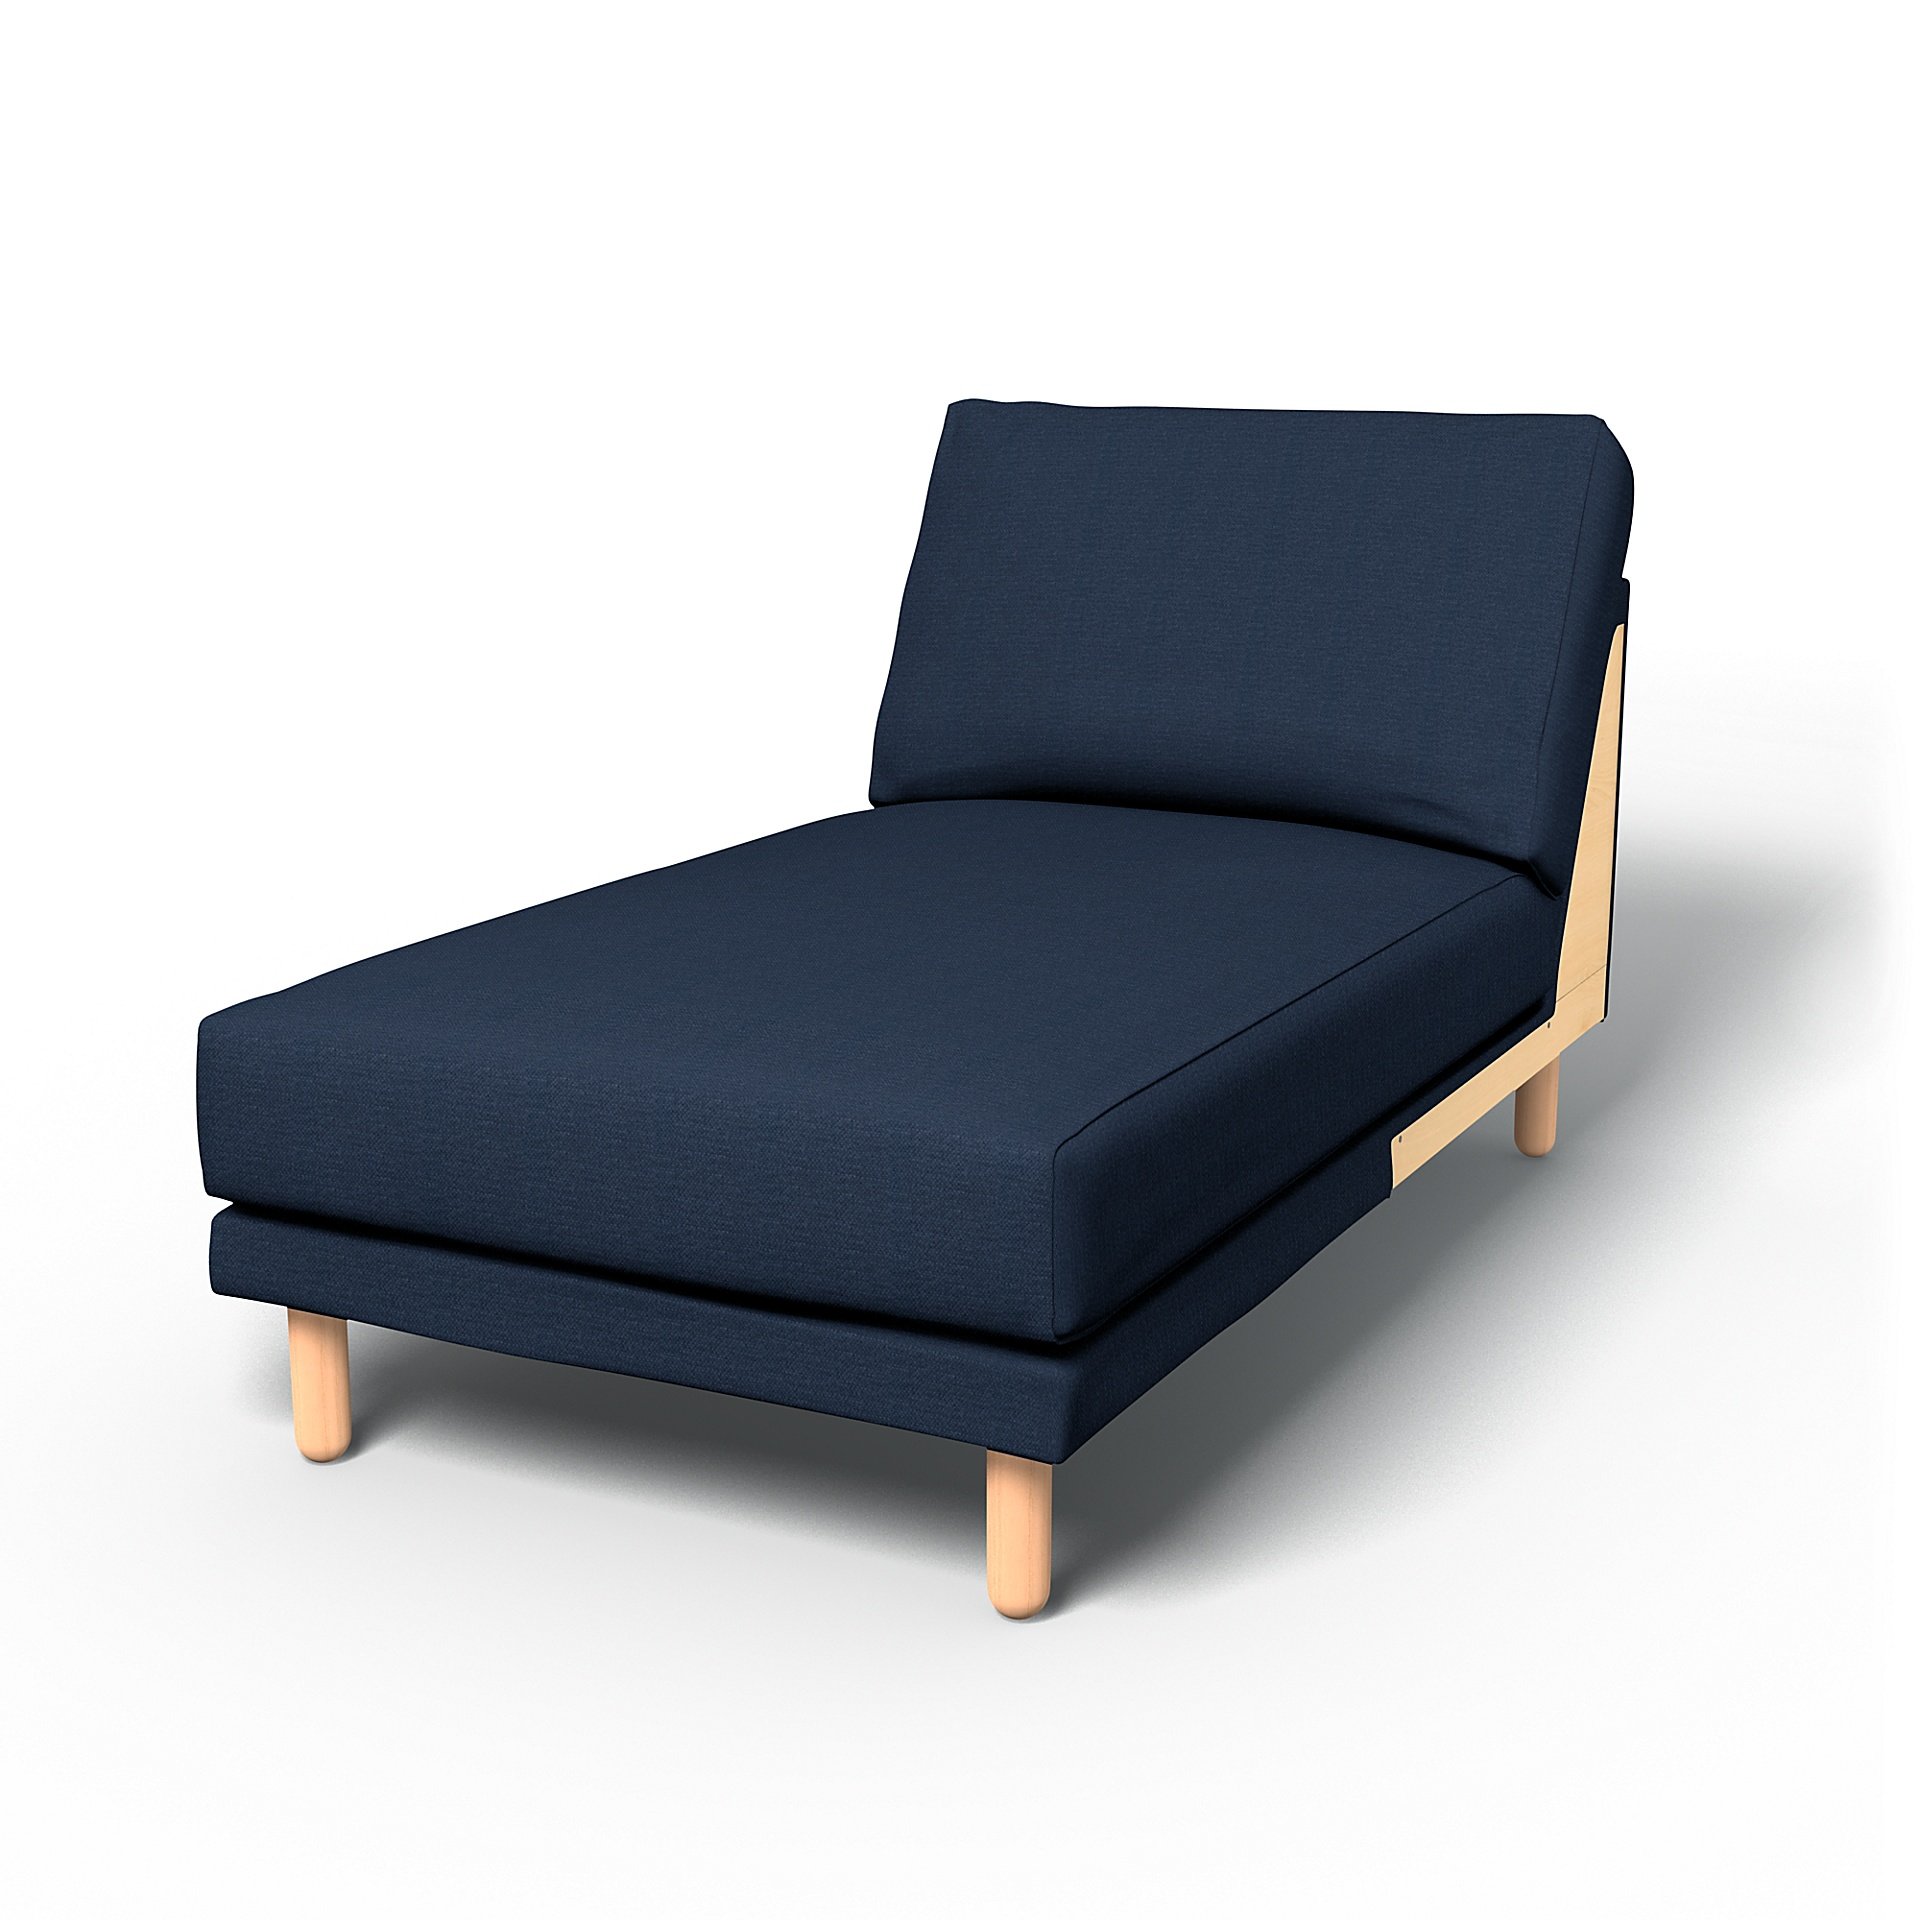 IKEA - Norsborg Chaise Longue Add-on Unit Cover, Navy Blue, Linen - Bemz